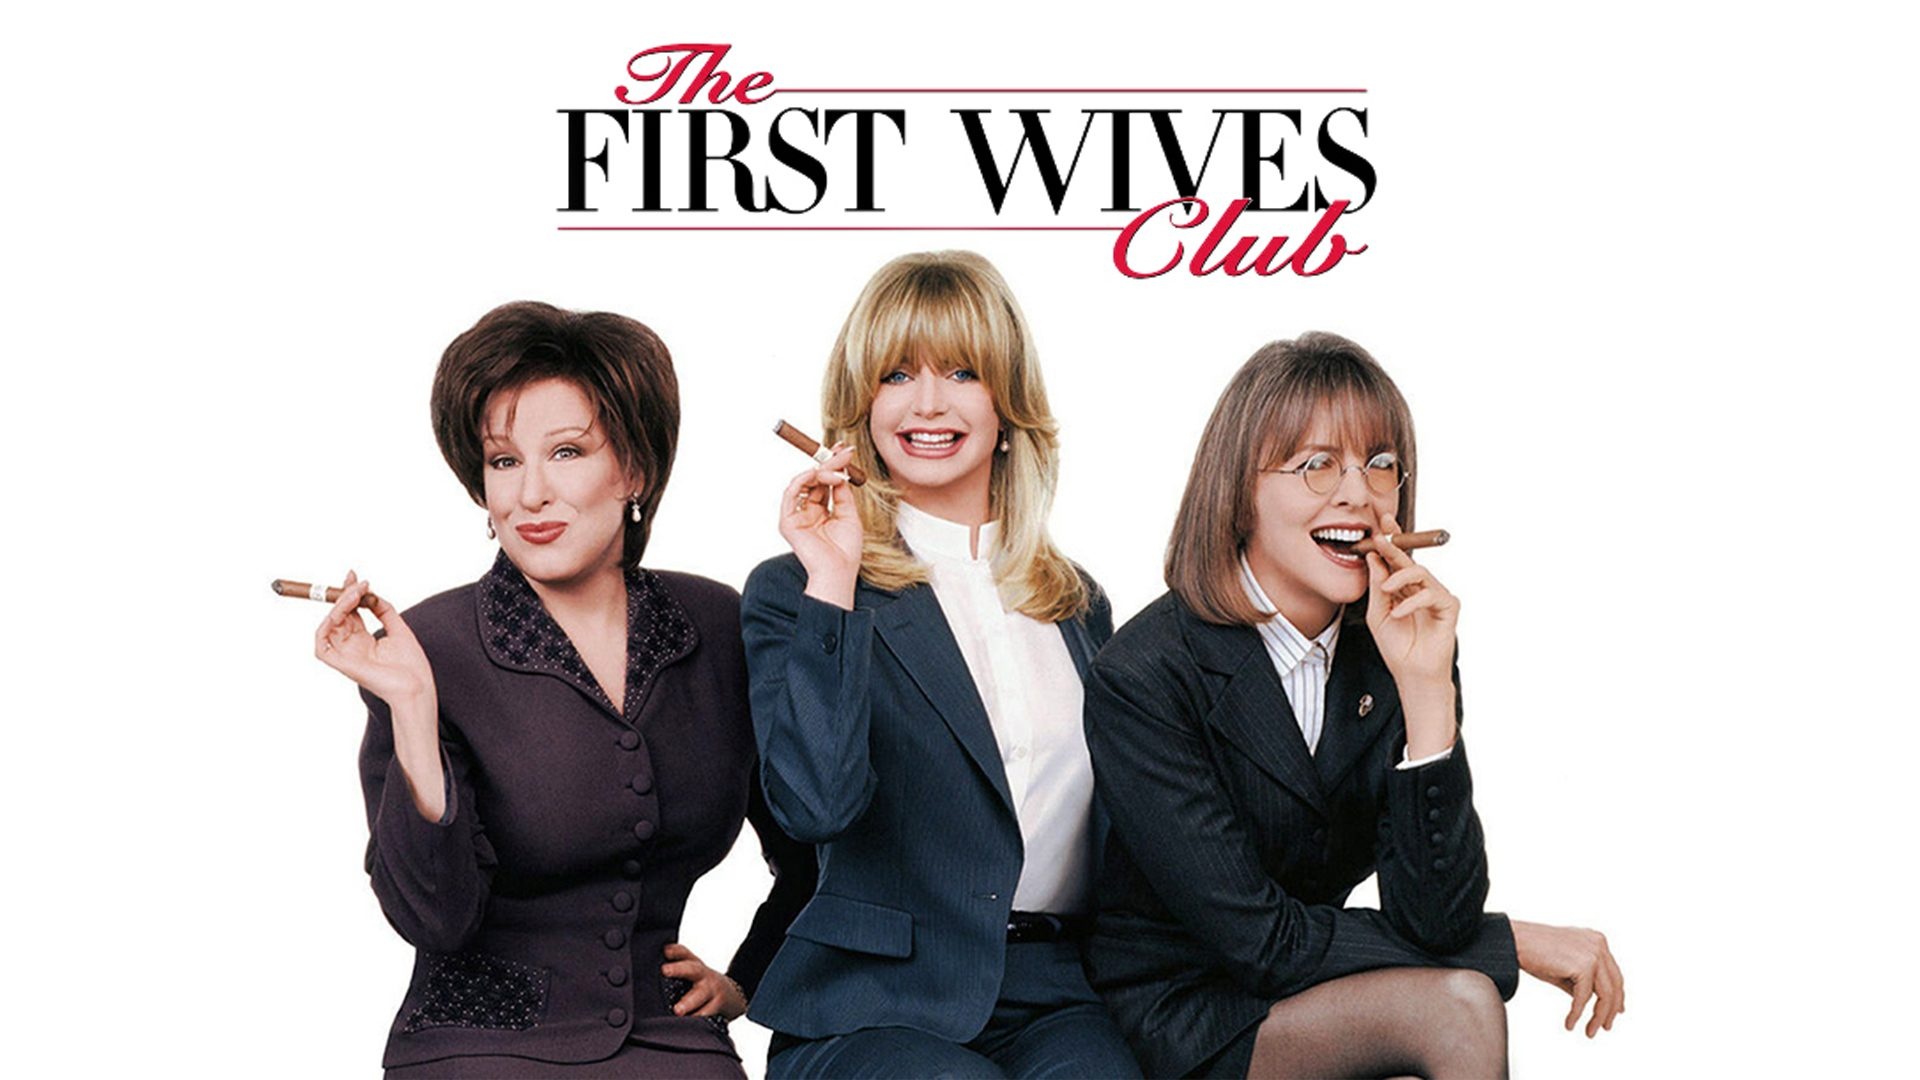 The First Wives Club 1996, Divorcees seeking revenge, Comedic ensemble, Iconic fashion, 1920x1080 Full HD Desktop